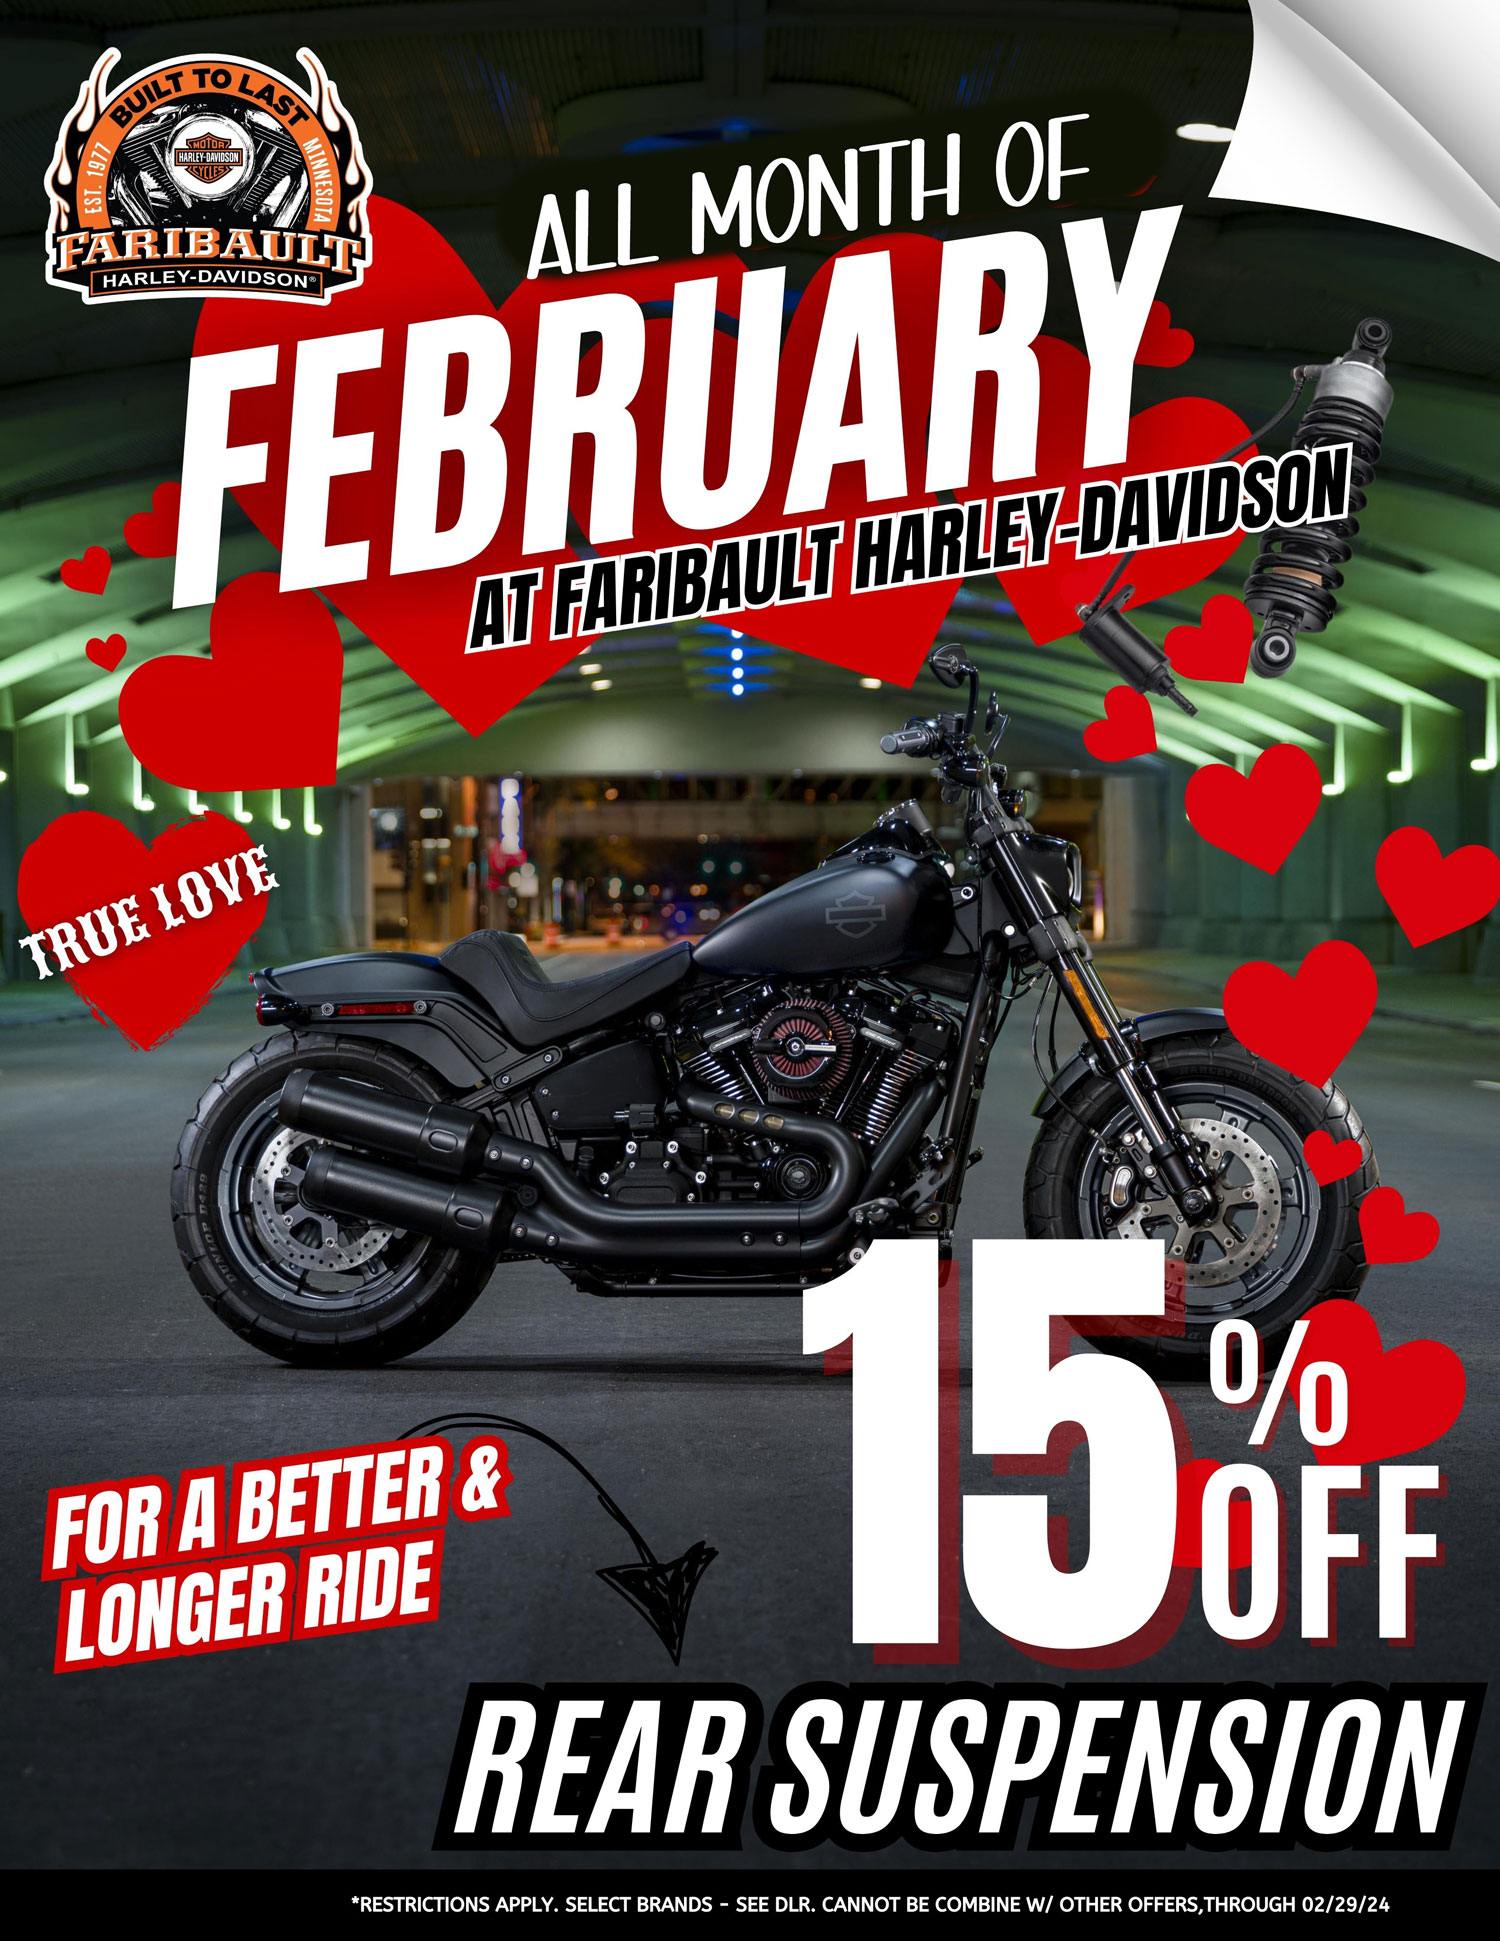 15% off Rear Suspension at Faribault Harley-Davidson this February